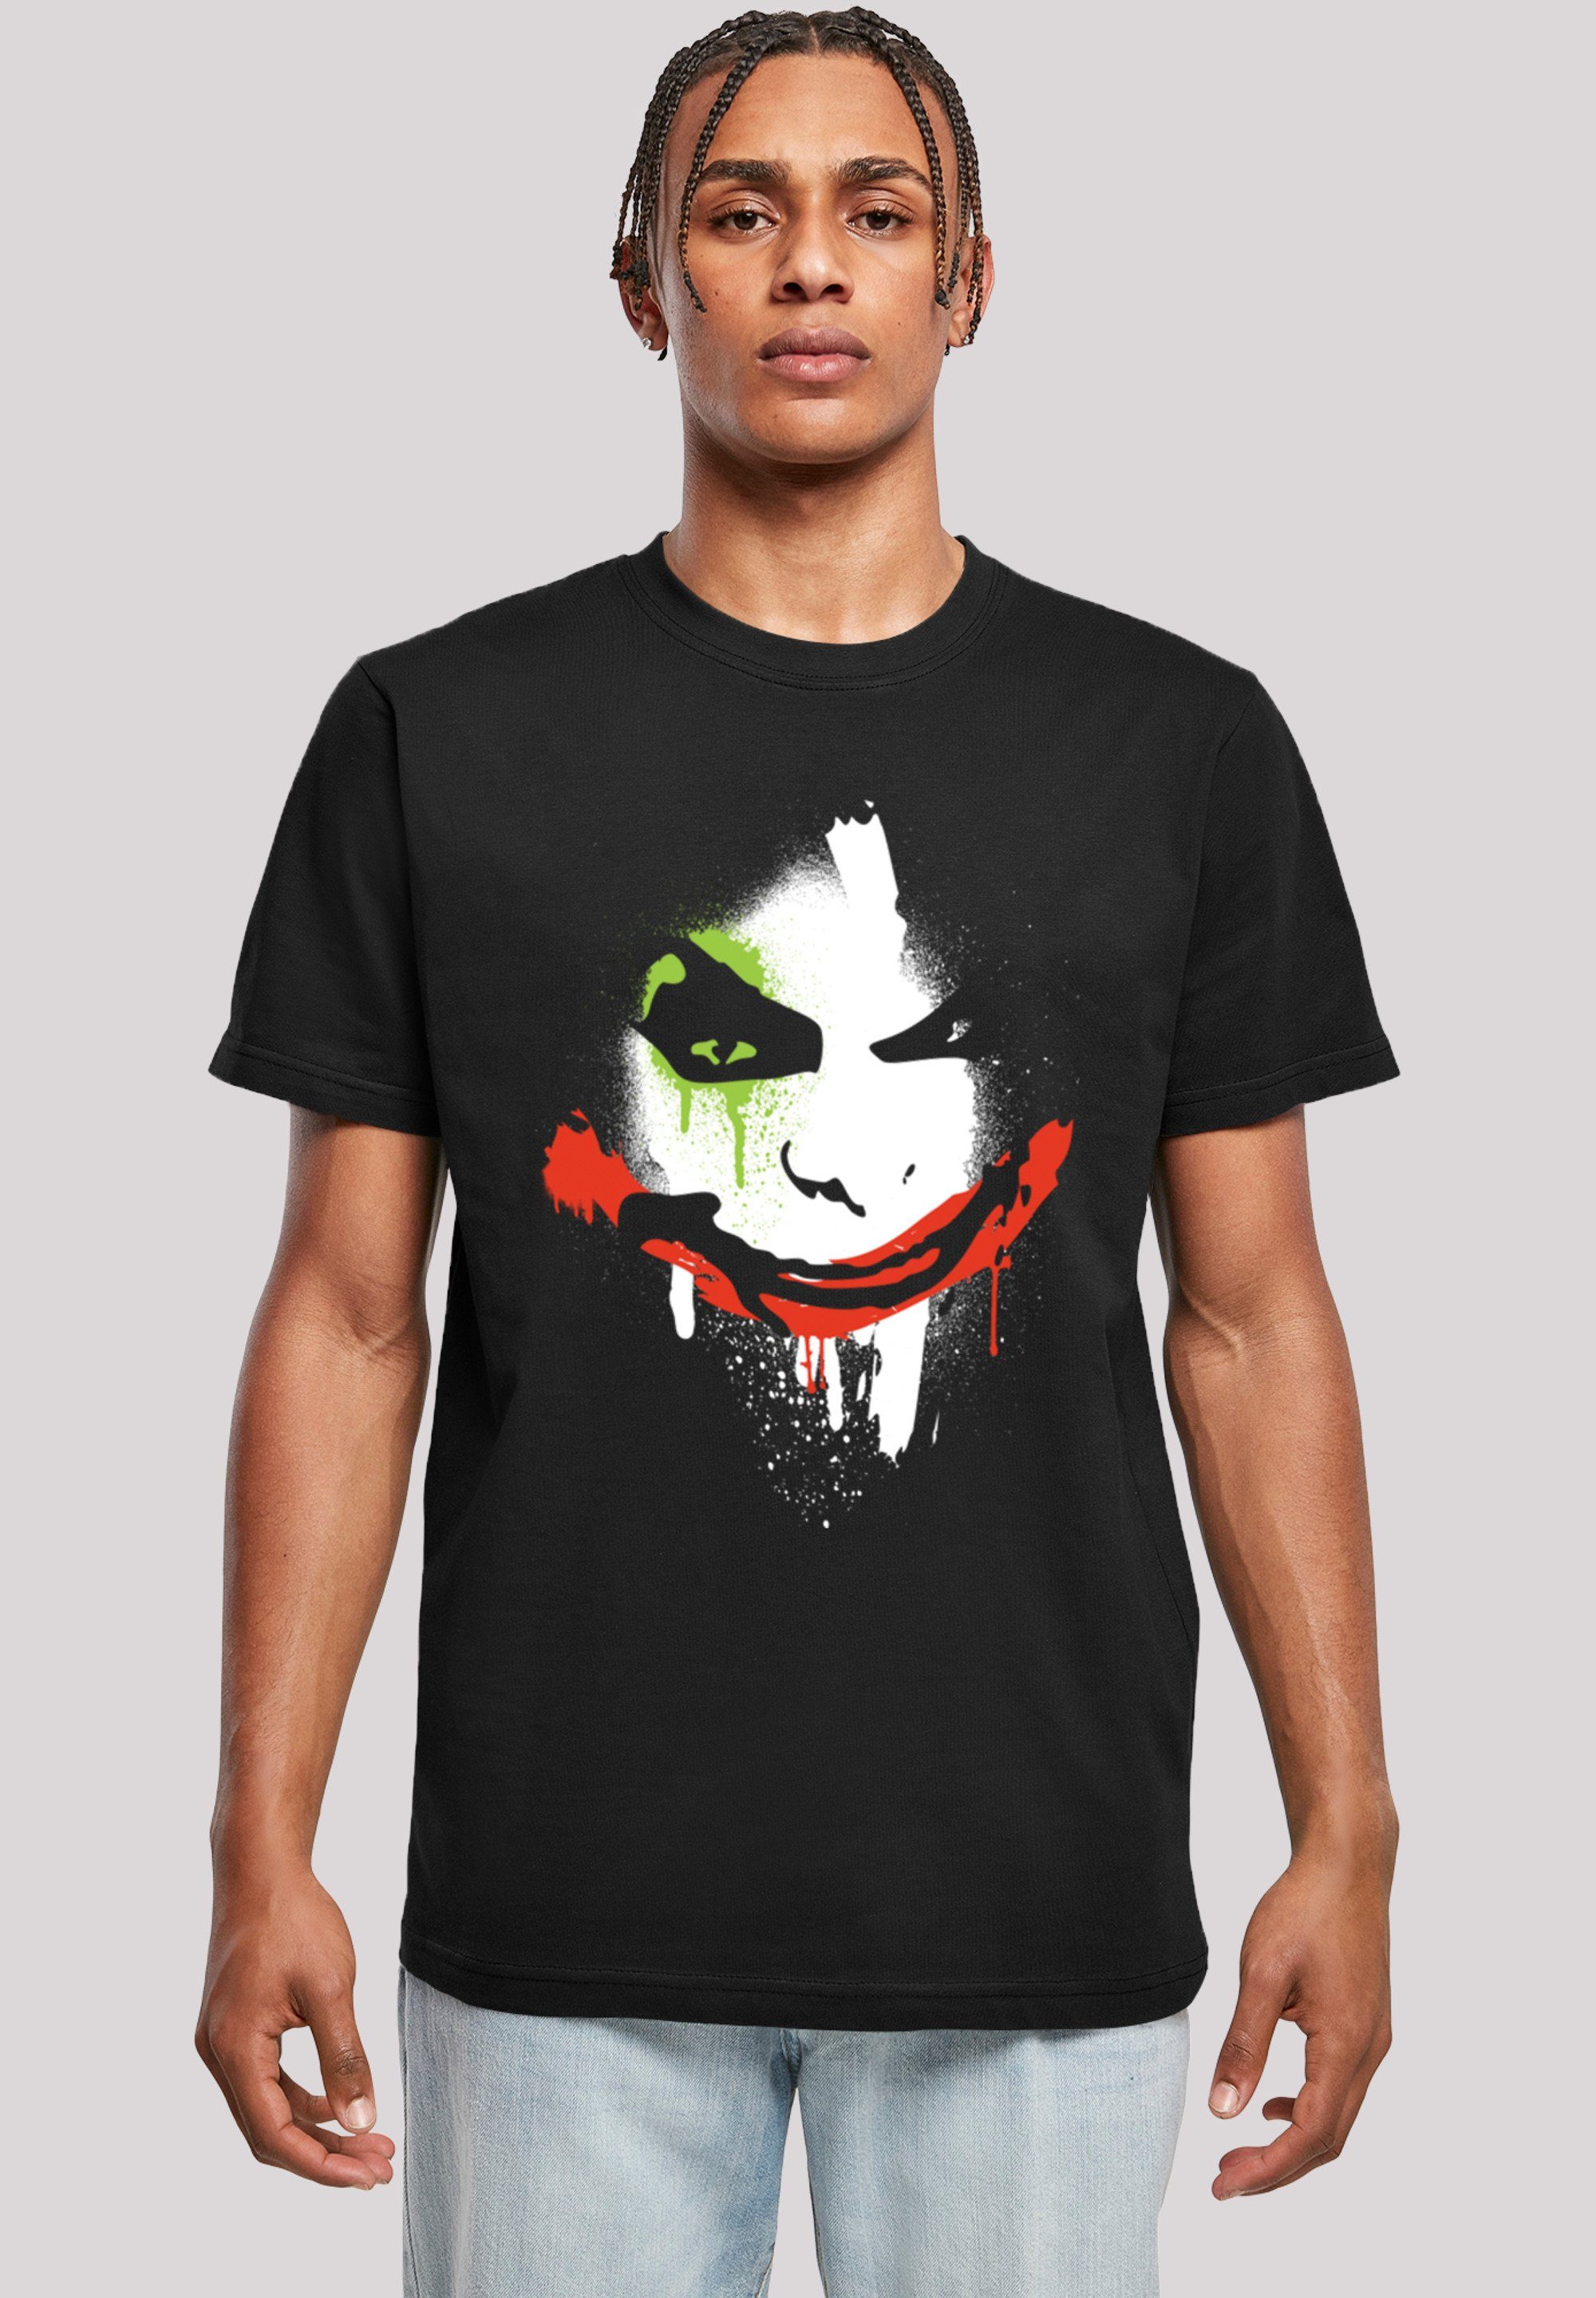 T-Shirt Comics City Batman Joker Print DC F4NT4STIC Arkham